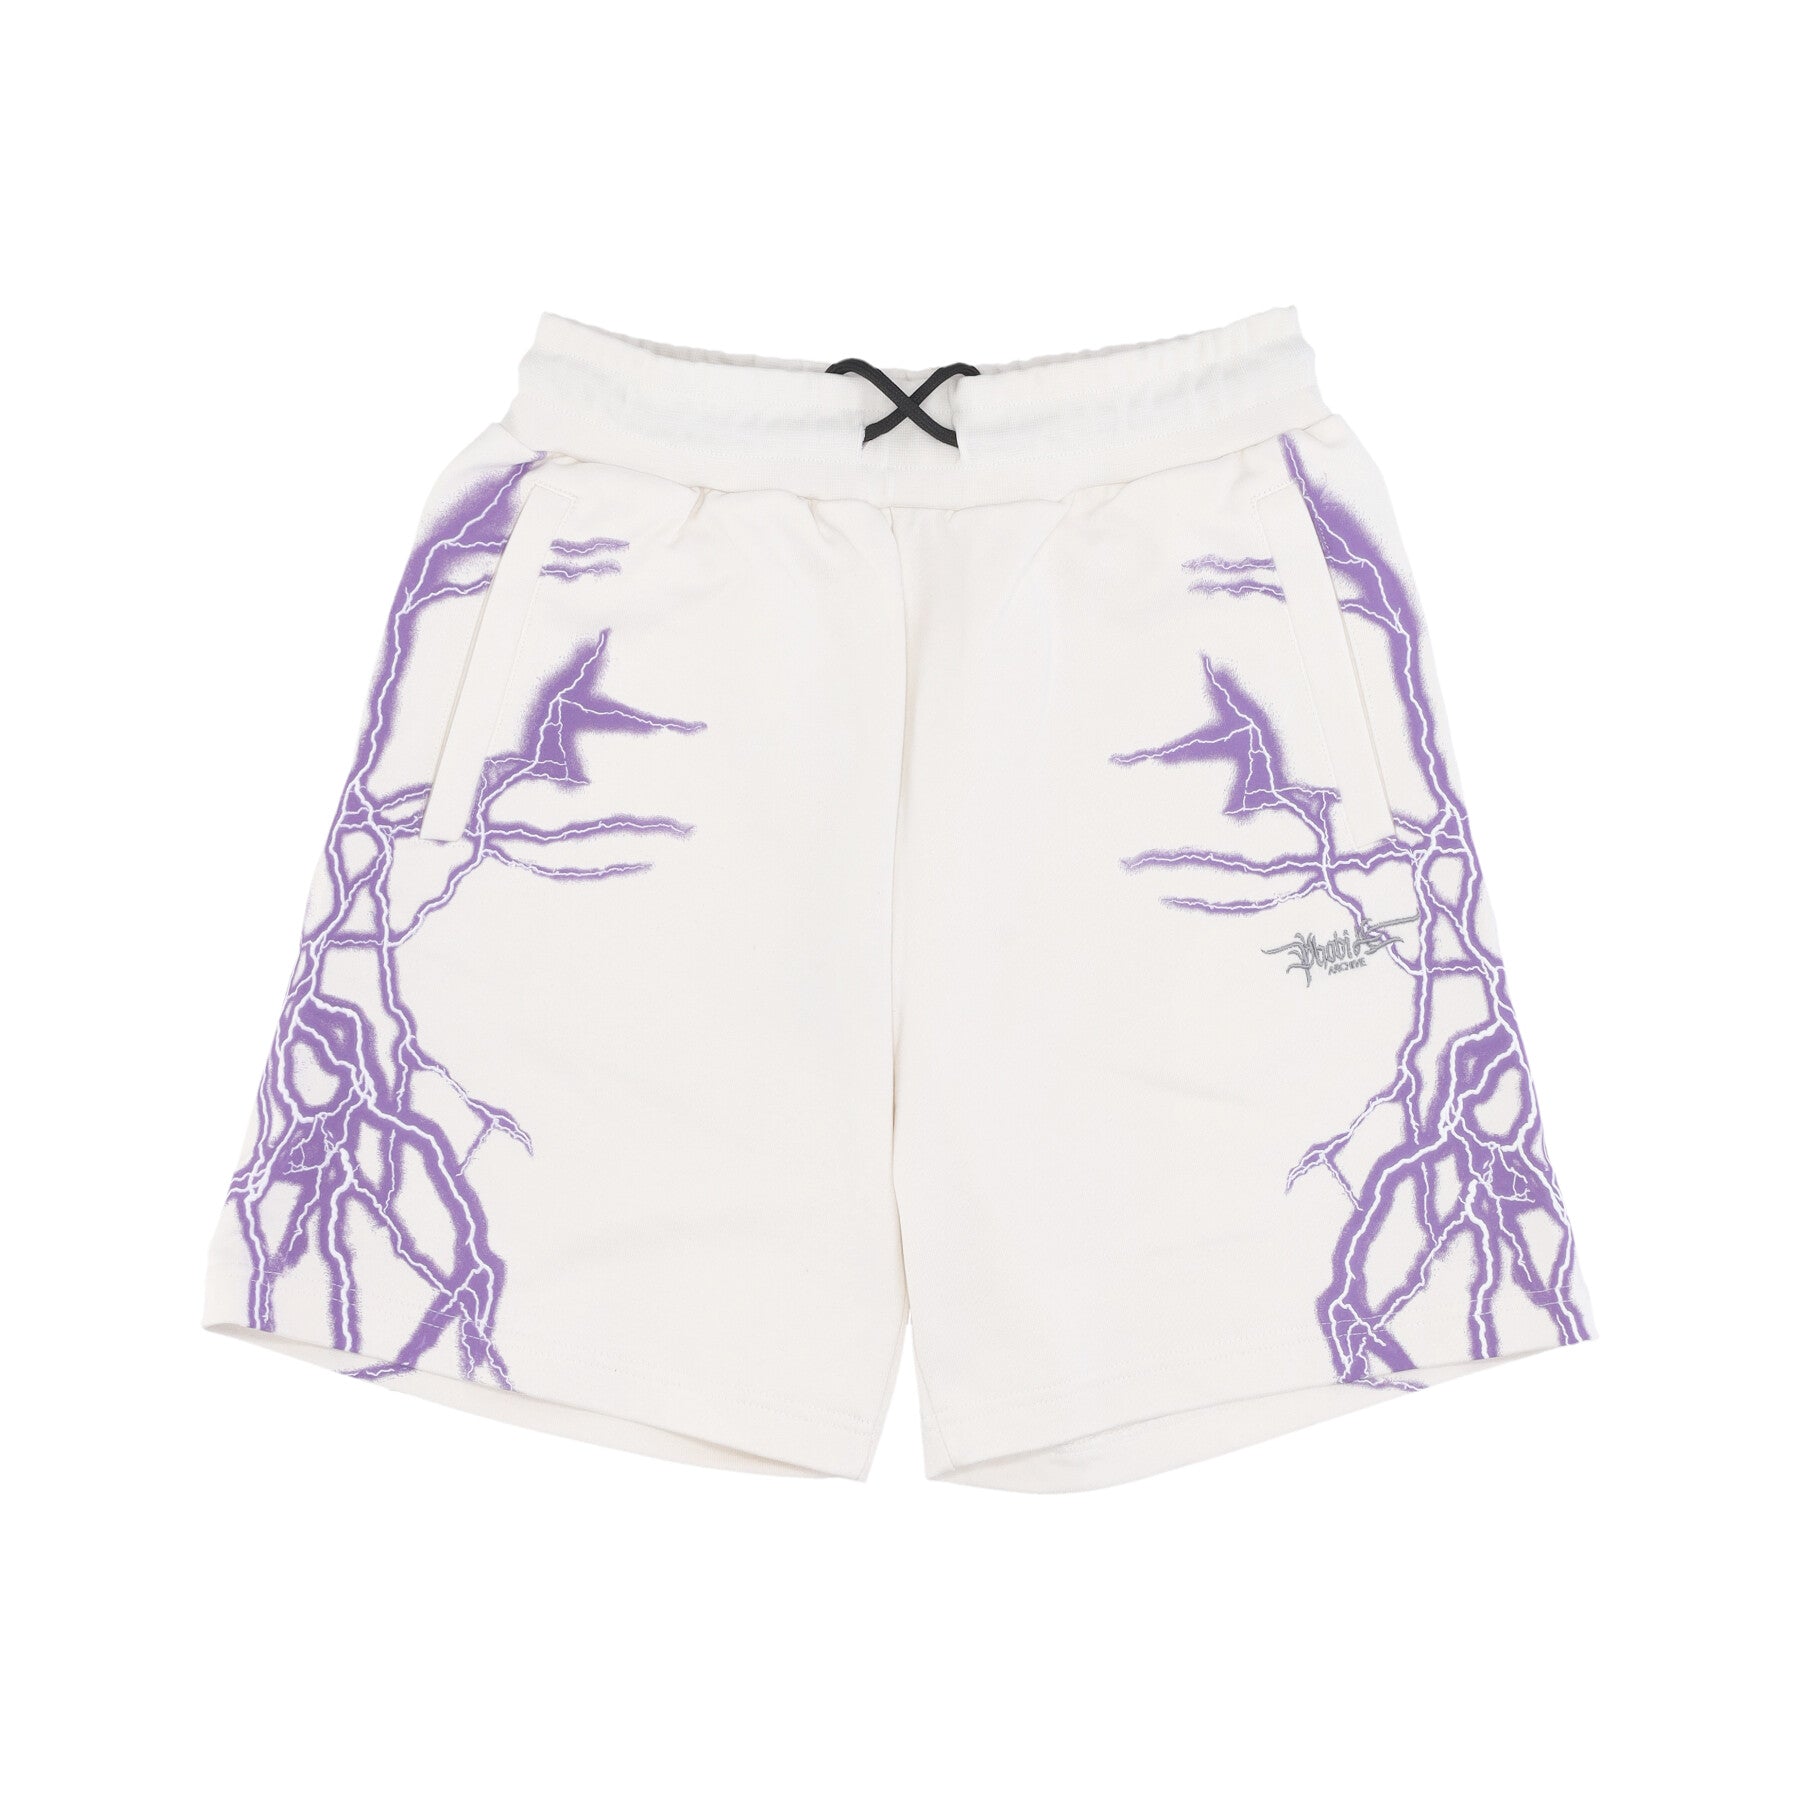 Pantalone Tuta Leggero Uomo Lateral Lightning Print Shorts White/purple PH00569